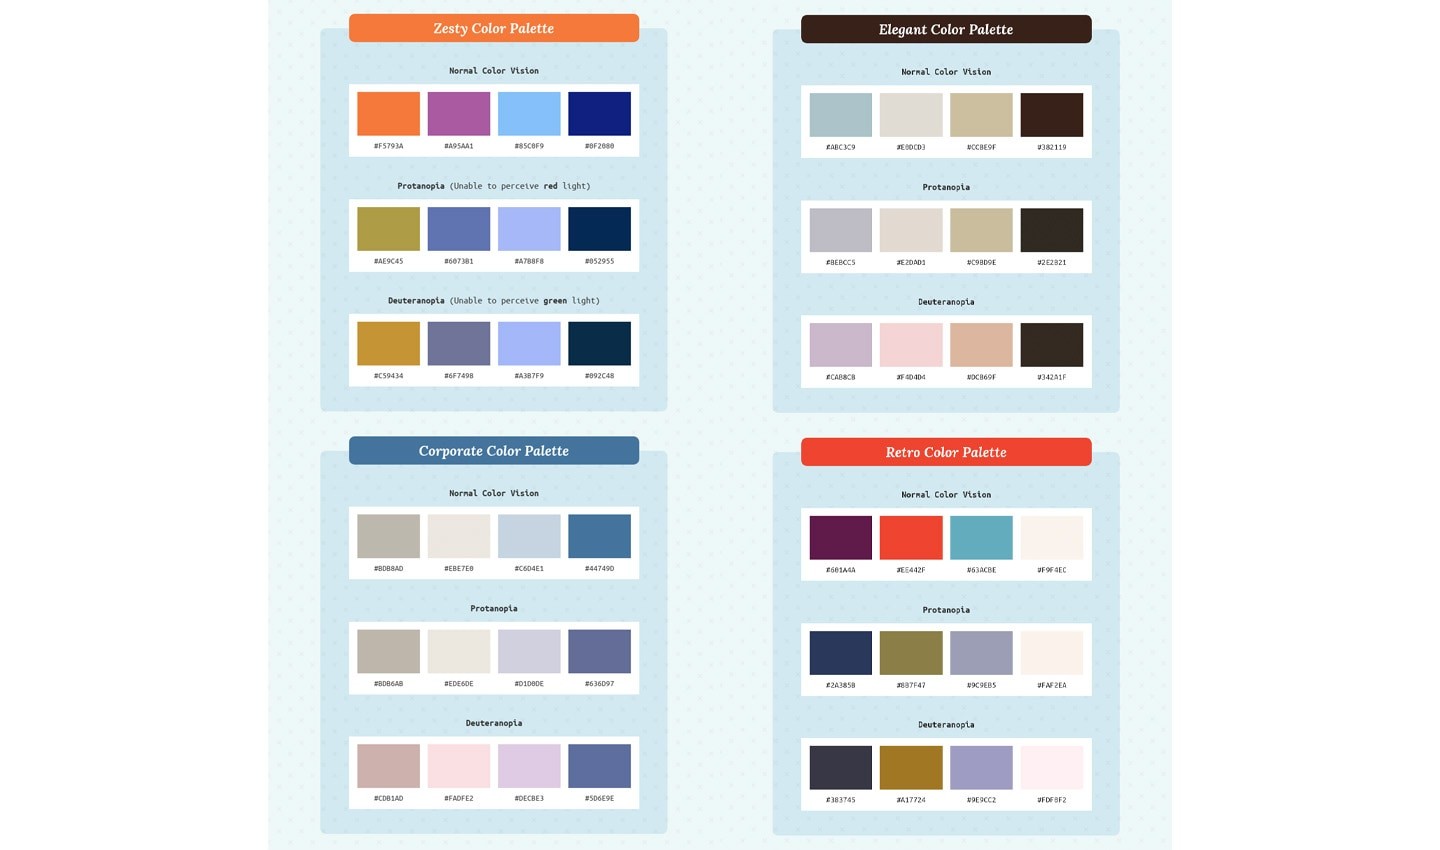 Color palettes for color blindness